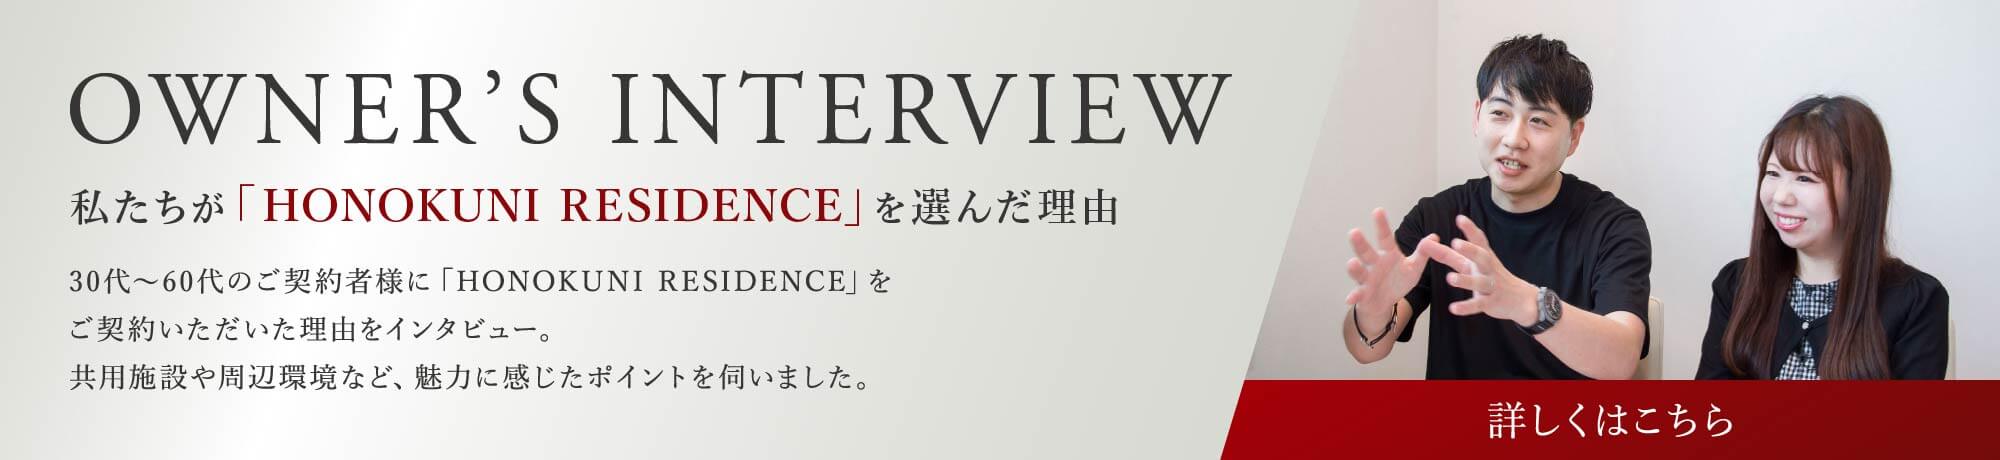 Owners Interview 私たちが「HONOKUNI RESIDENCE」を選んだ理由 詳しくはこちら